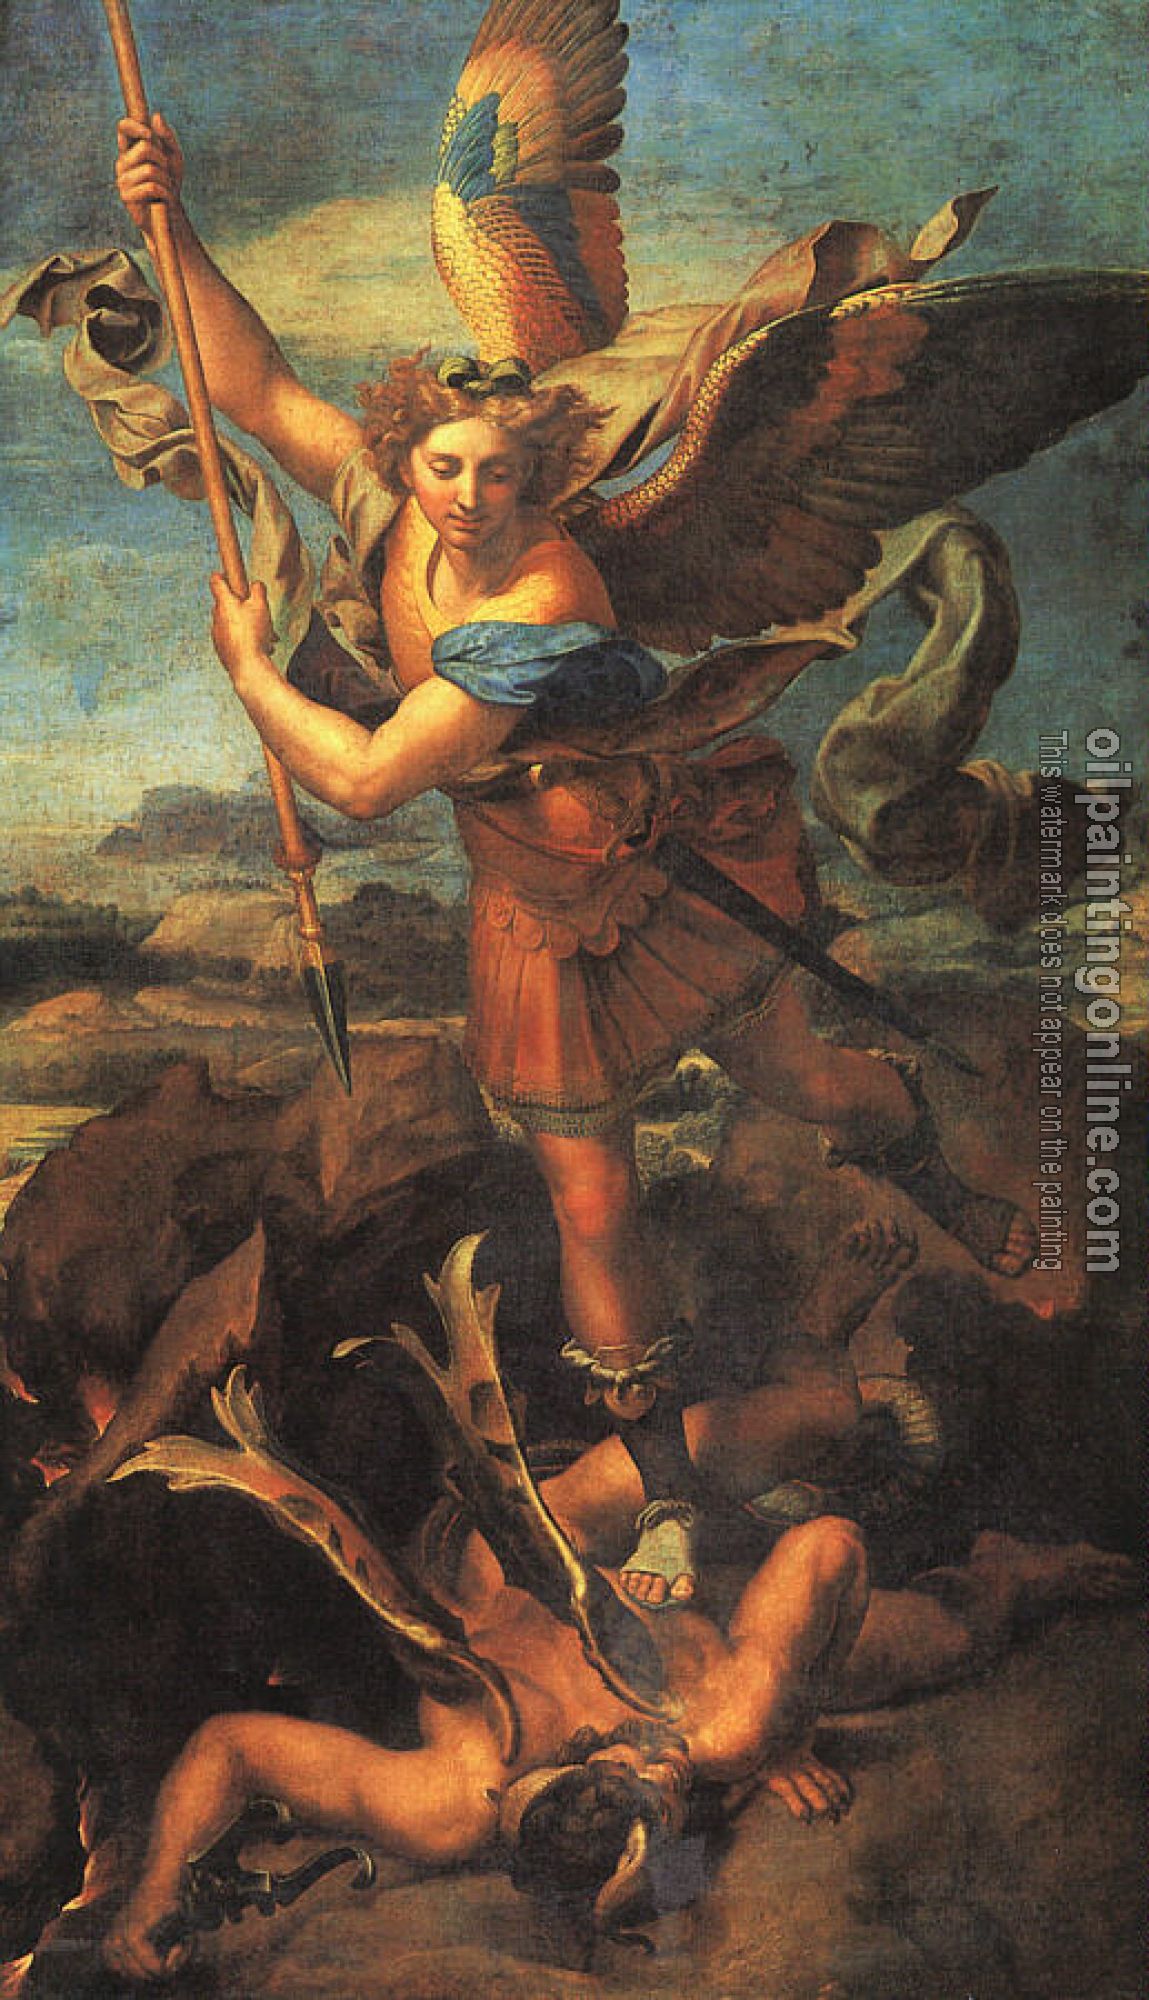 Raphael - St Michael and the Satan